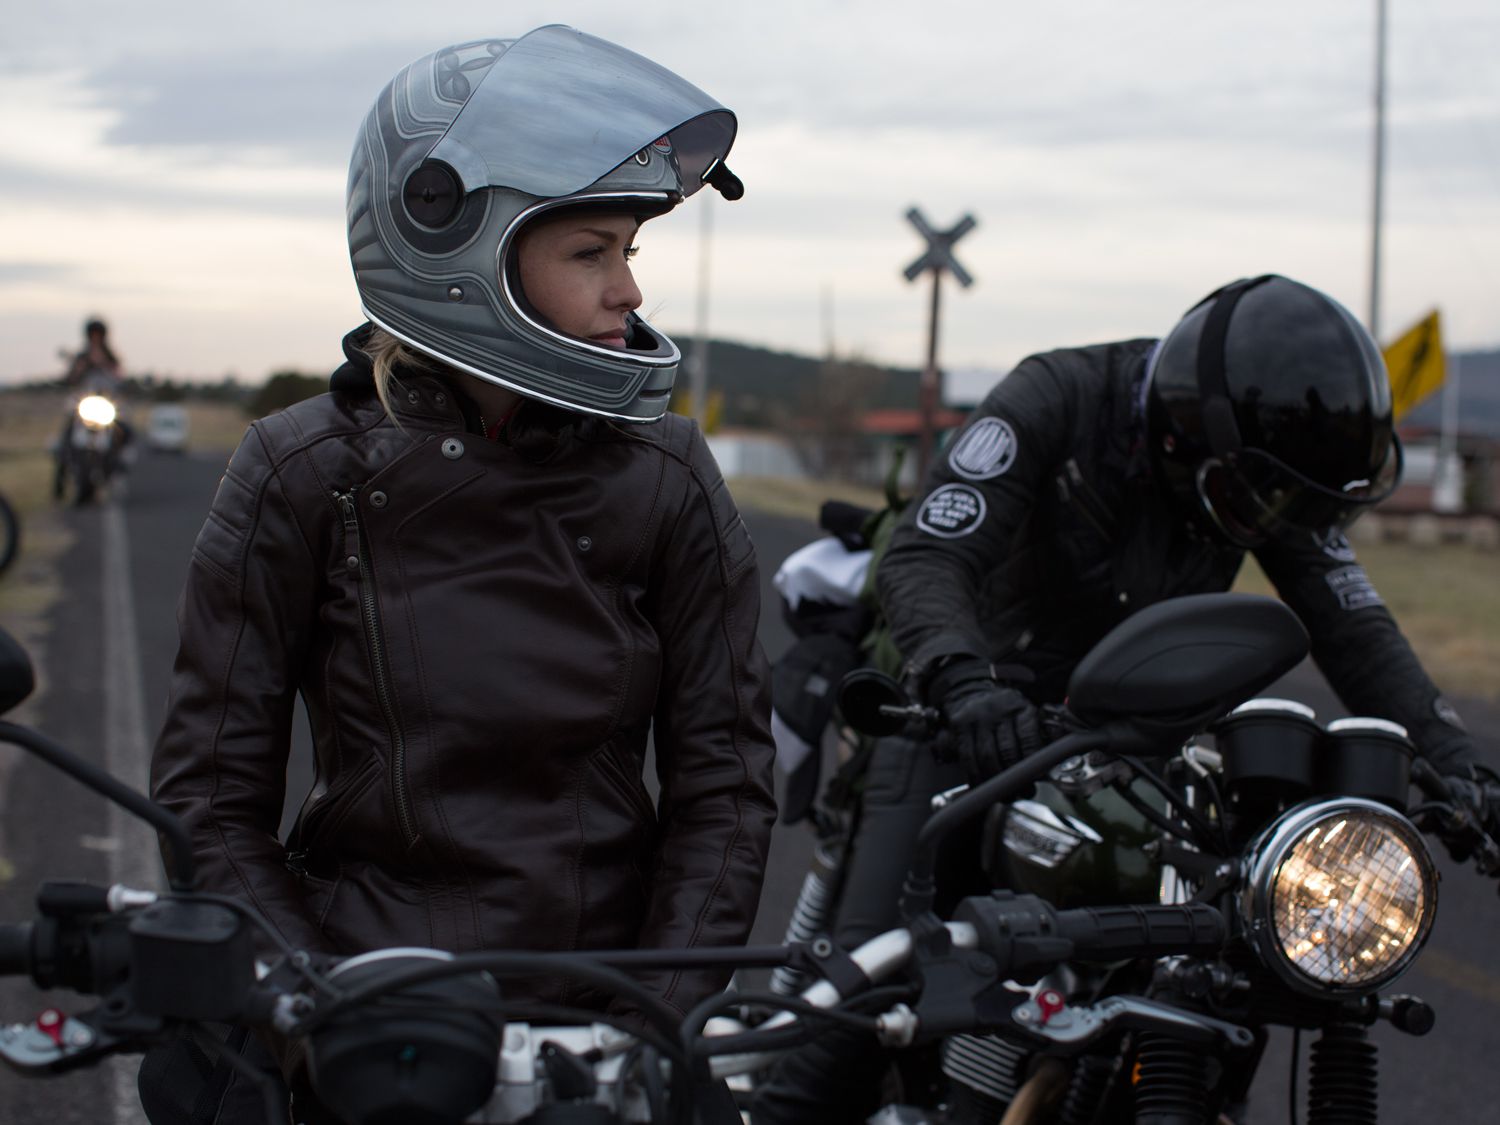 Bell Bullitt Retro Helmet, Motorcycle Gear Review | Motorcycle Cruiser